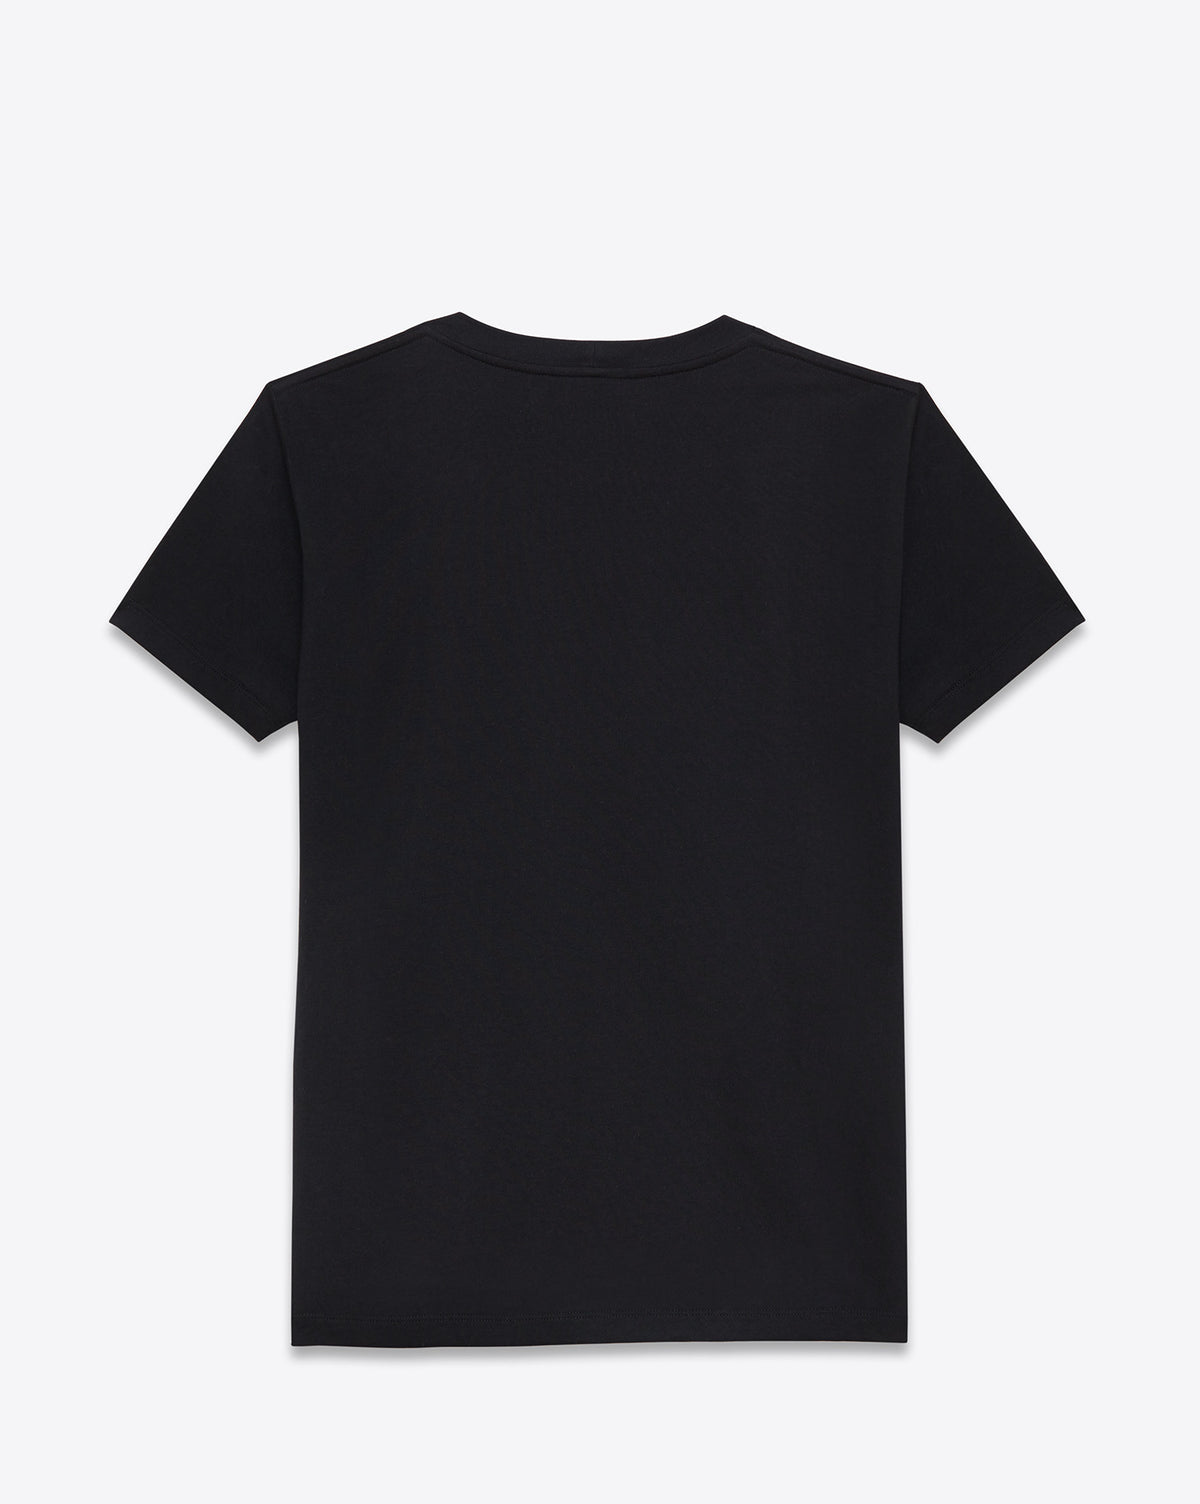 Wavy T-Shirt Black - DEMEANOIR - 2